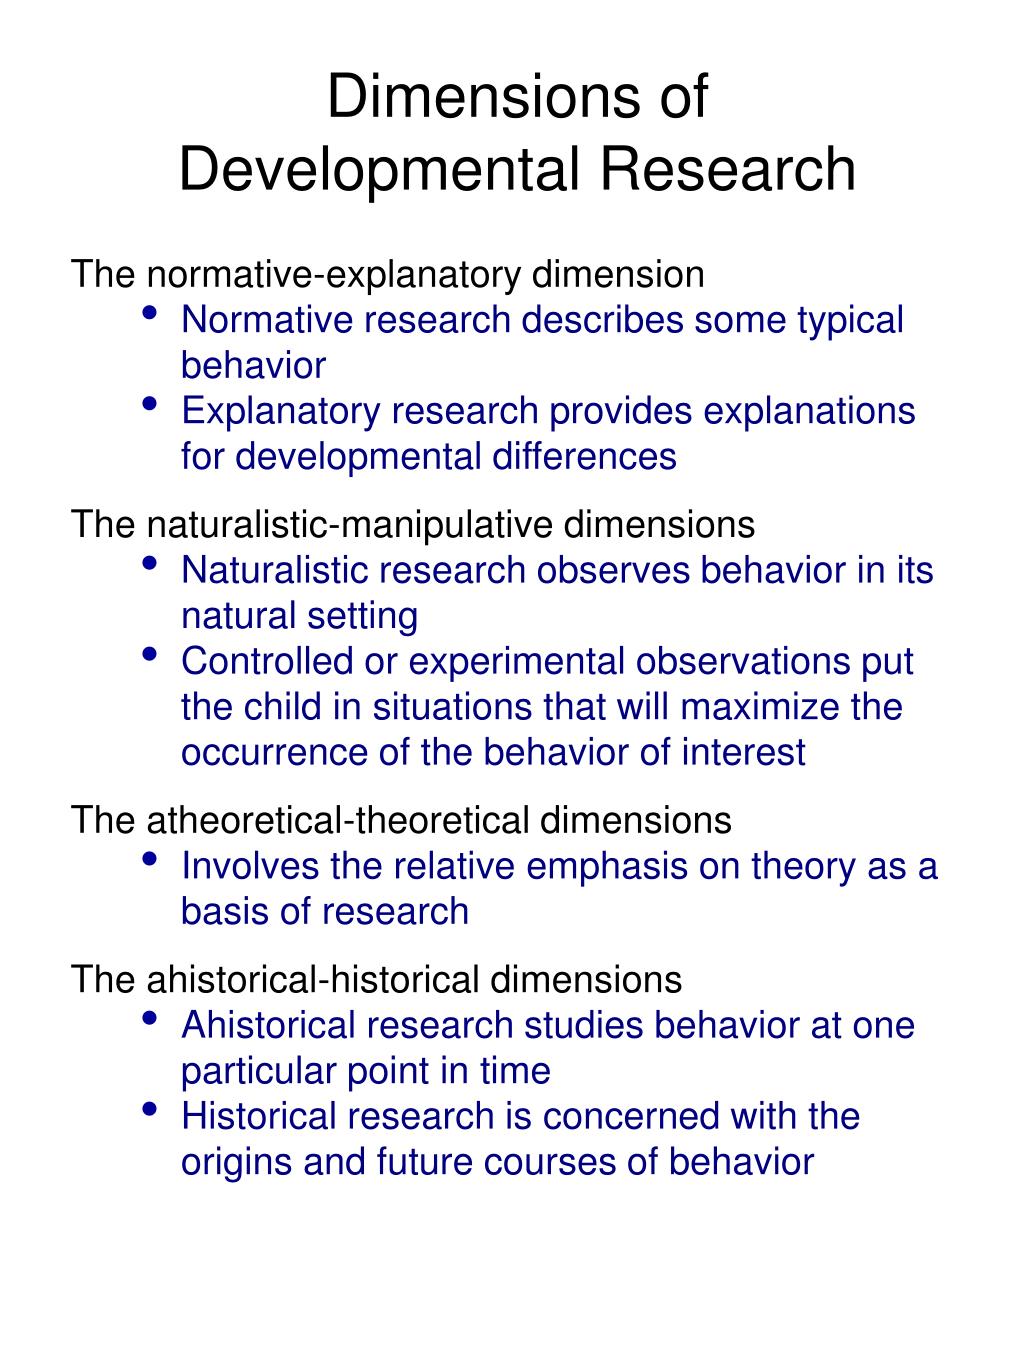 research methods for developmental psychology